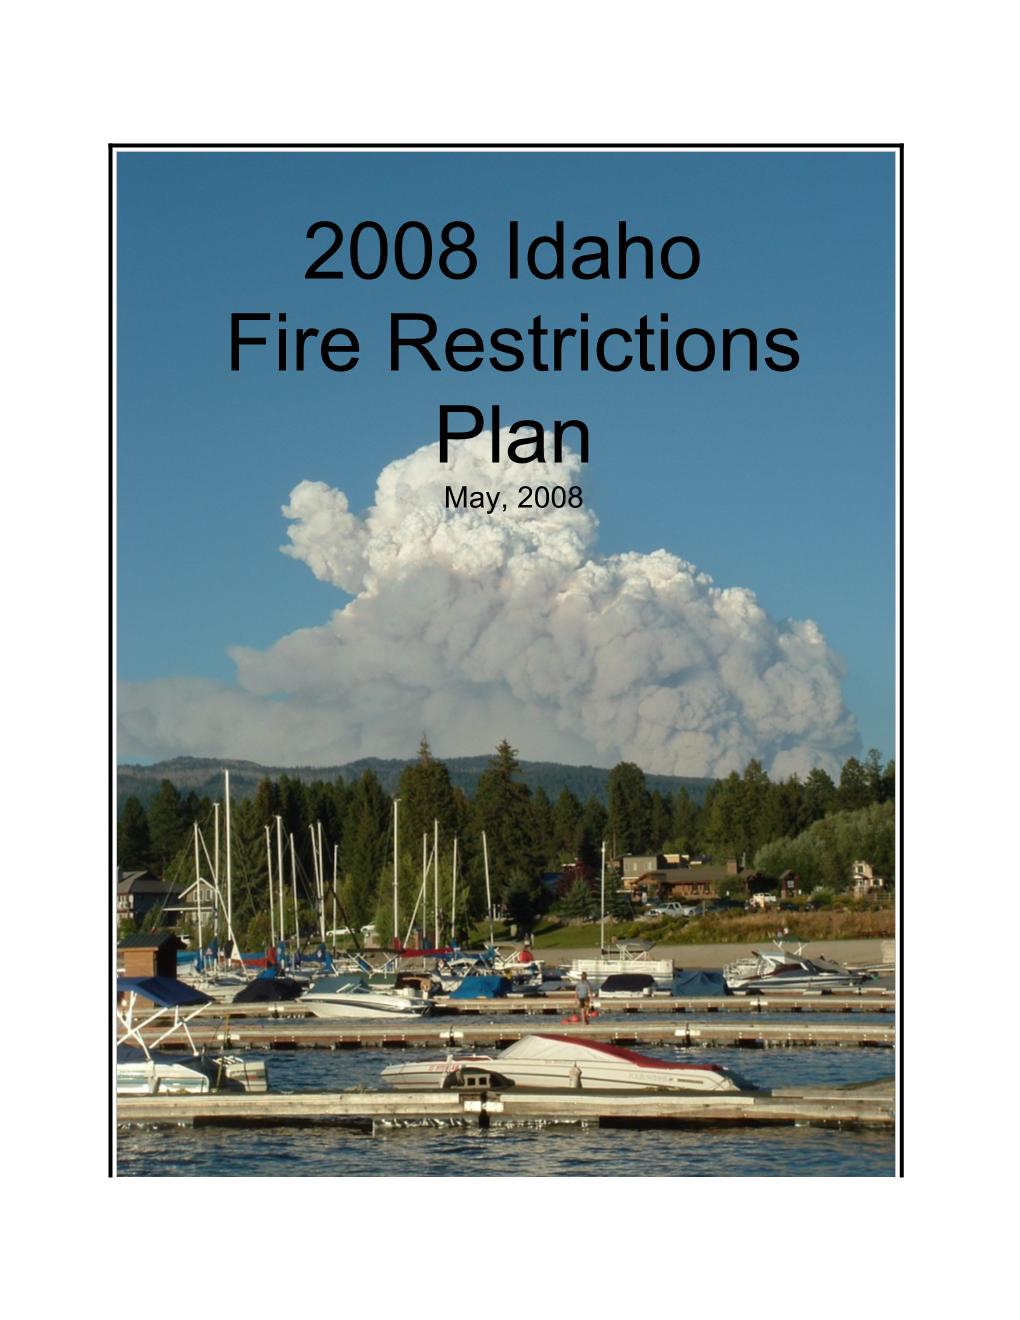 Idaho Fire Restrictions Plan